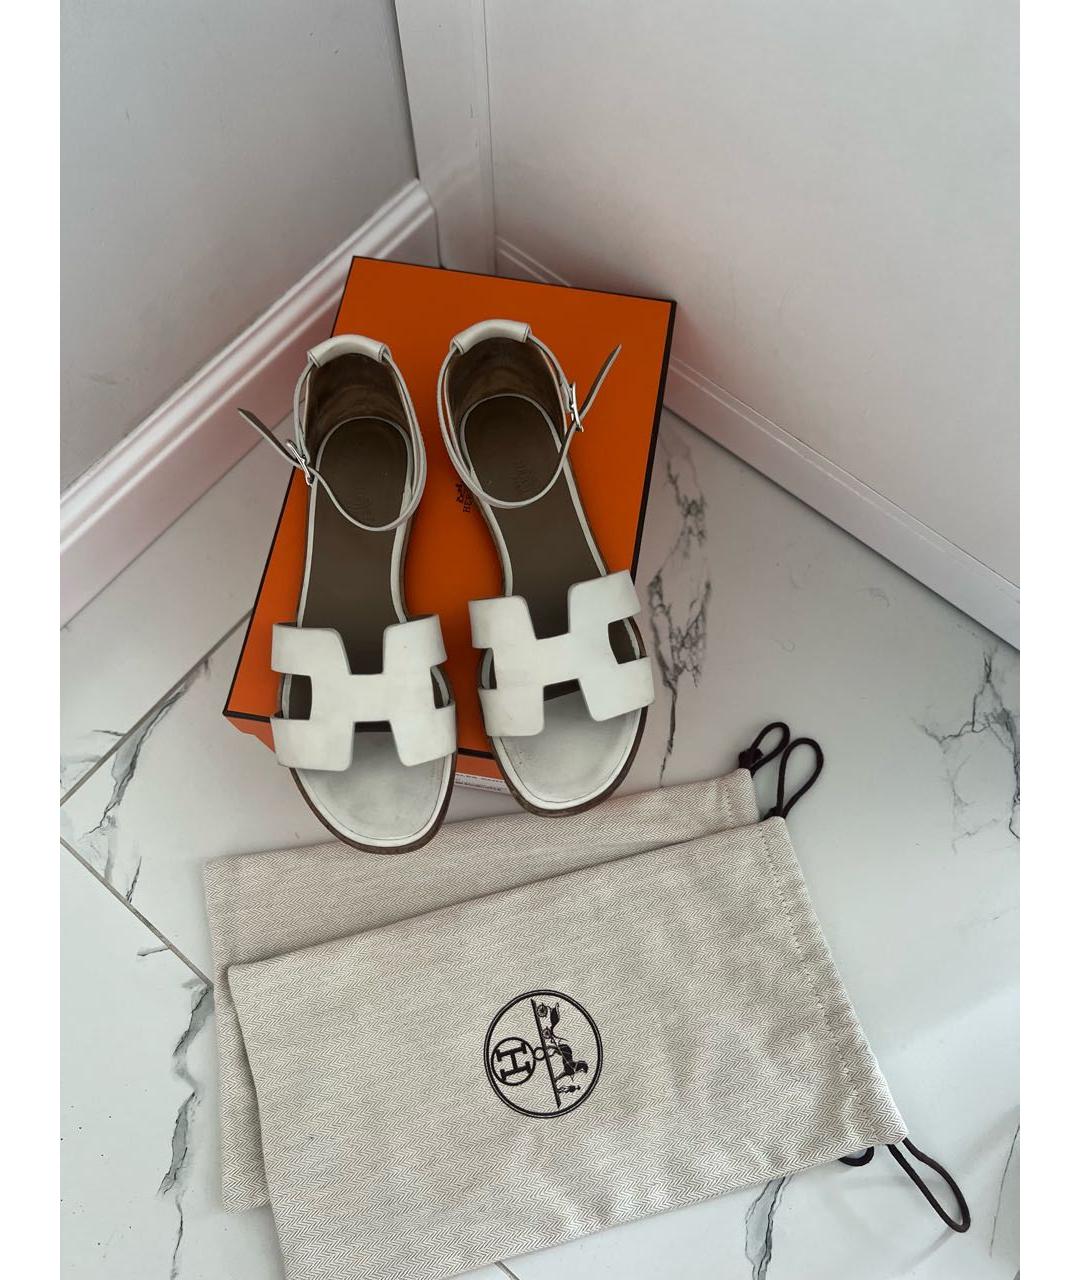 HERMES PRE-OWNED Белые кожаные сандалии, фото 2